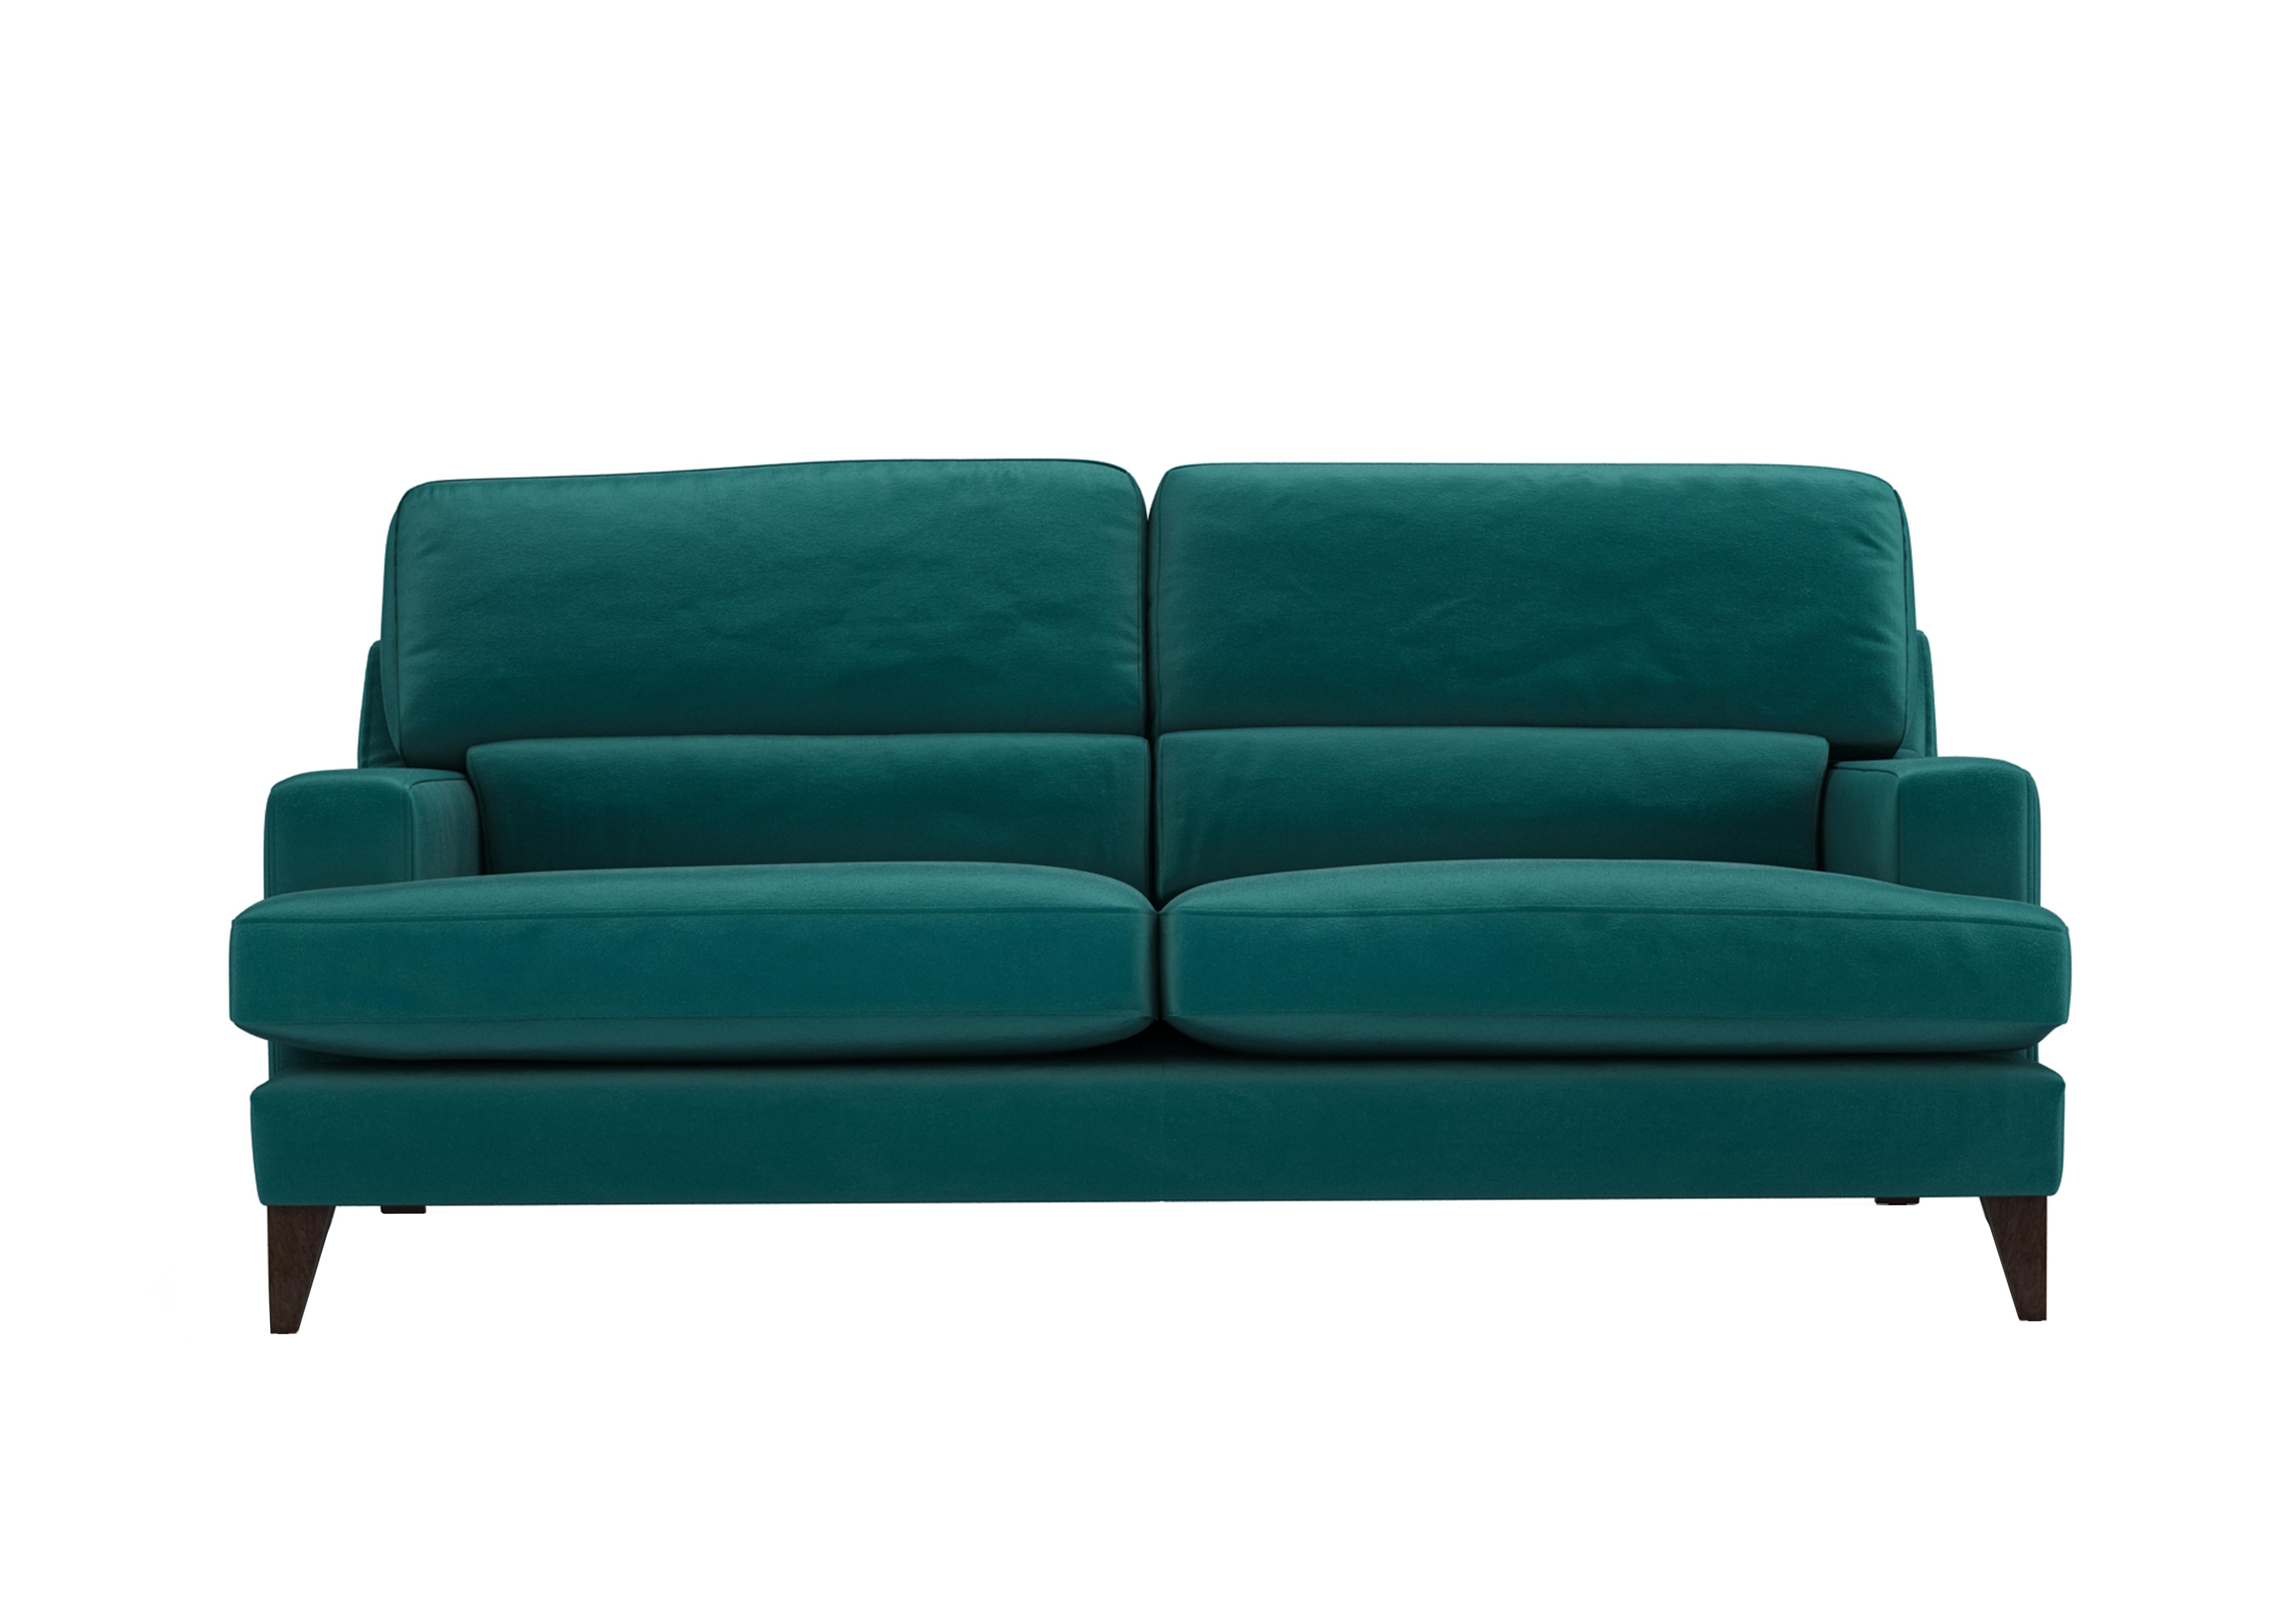 Romilly 3 Seater Fabric Sofa in Dra008 Dragoneye Wa Ft on Furniture Village